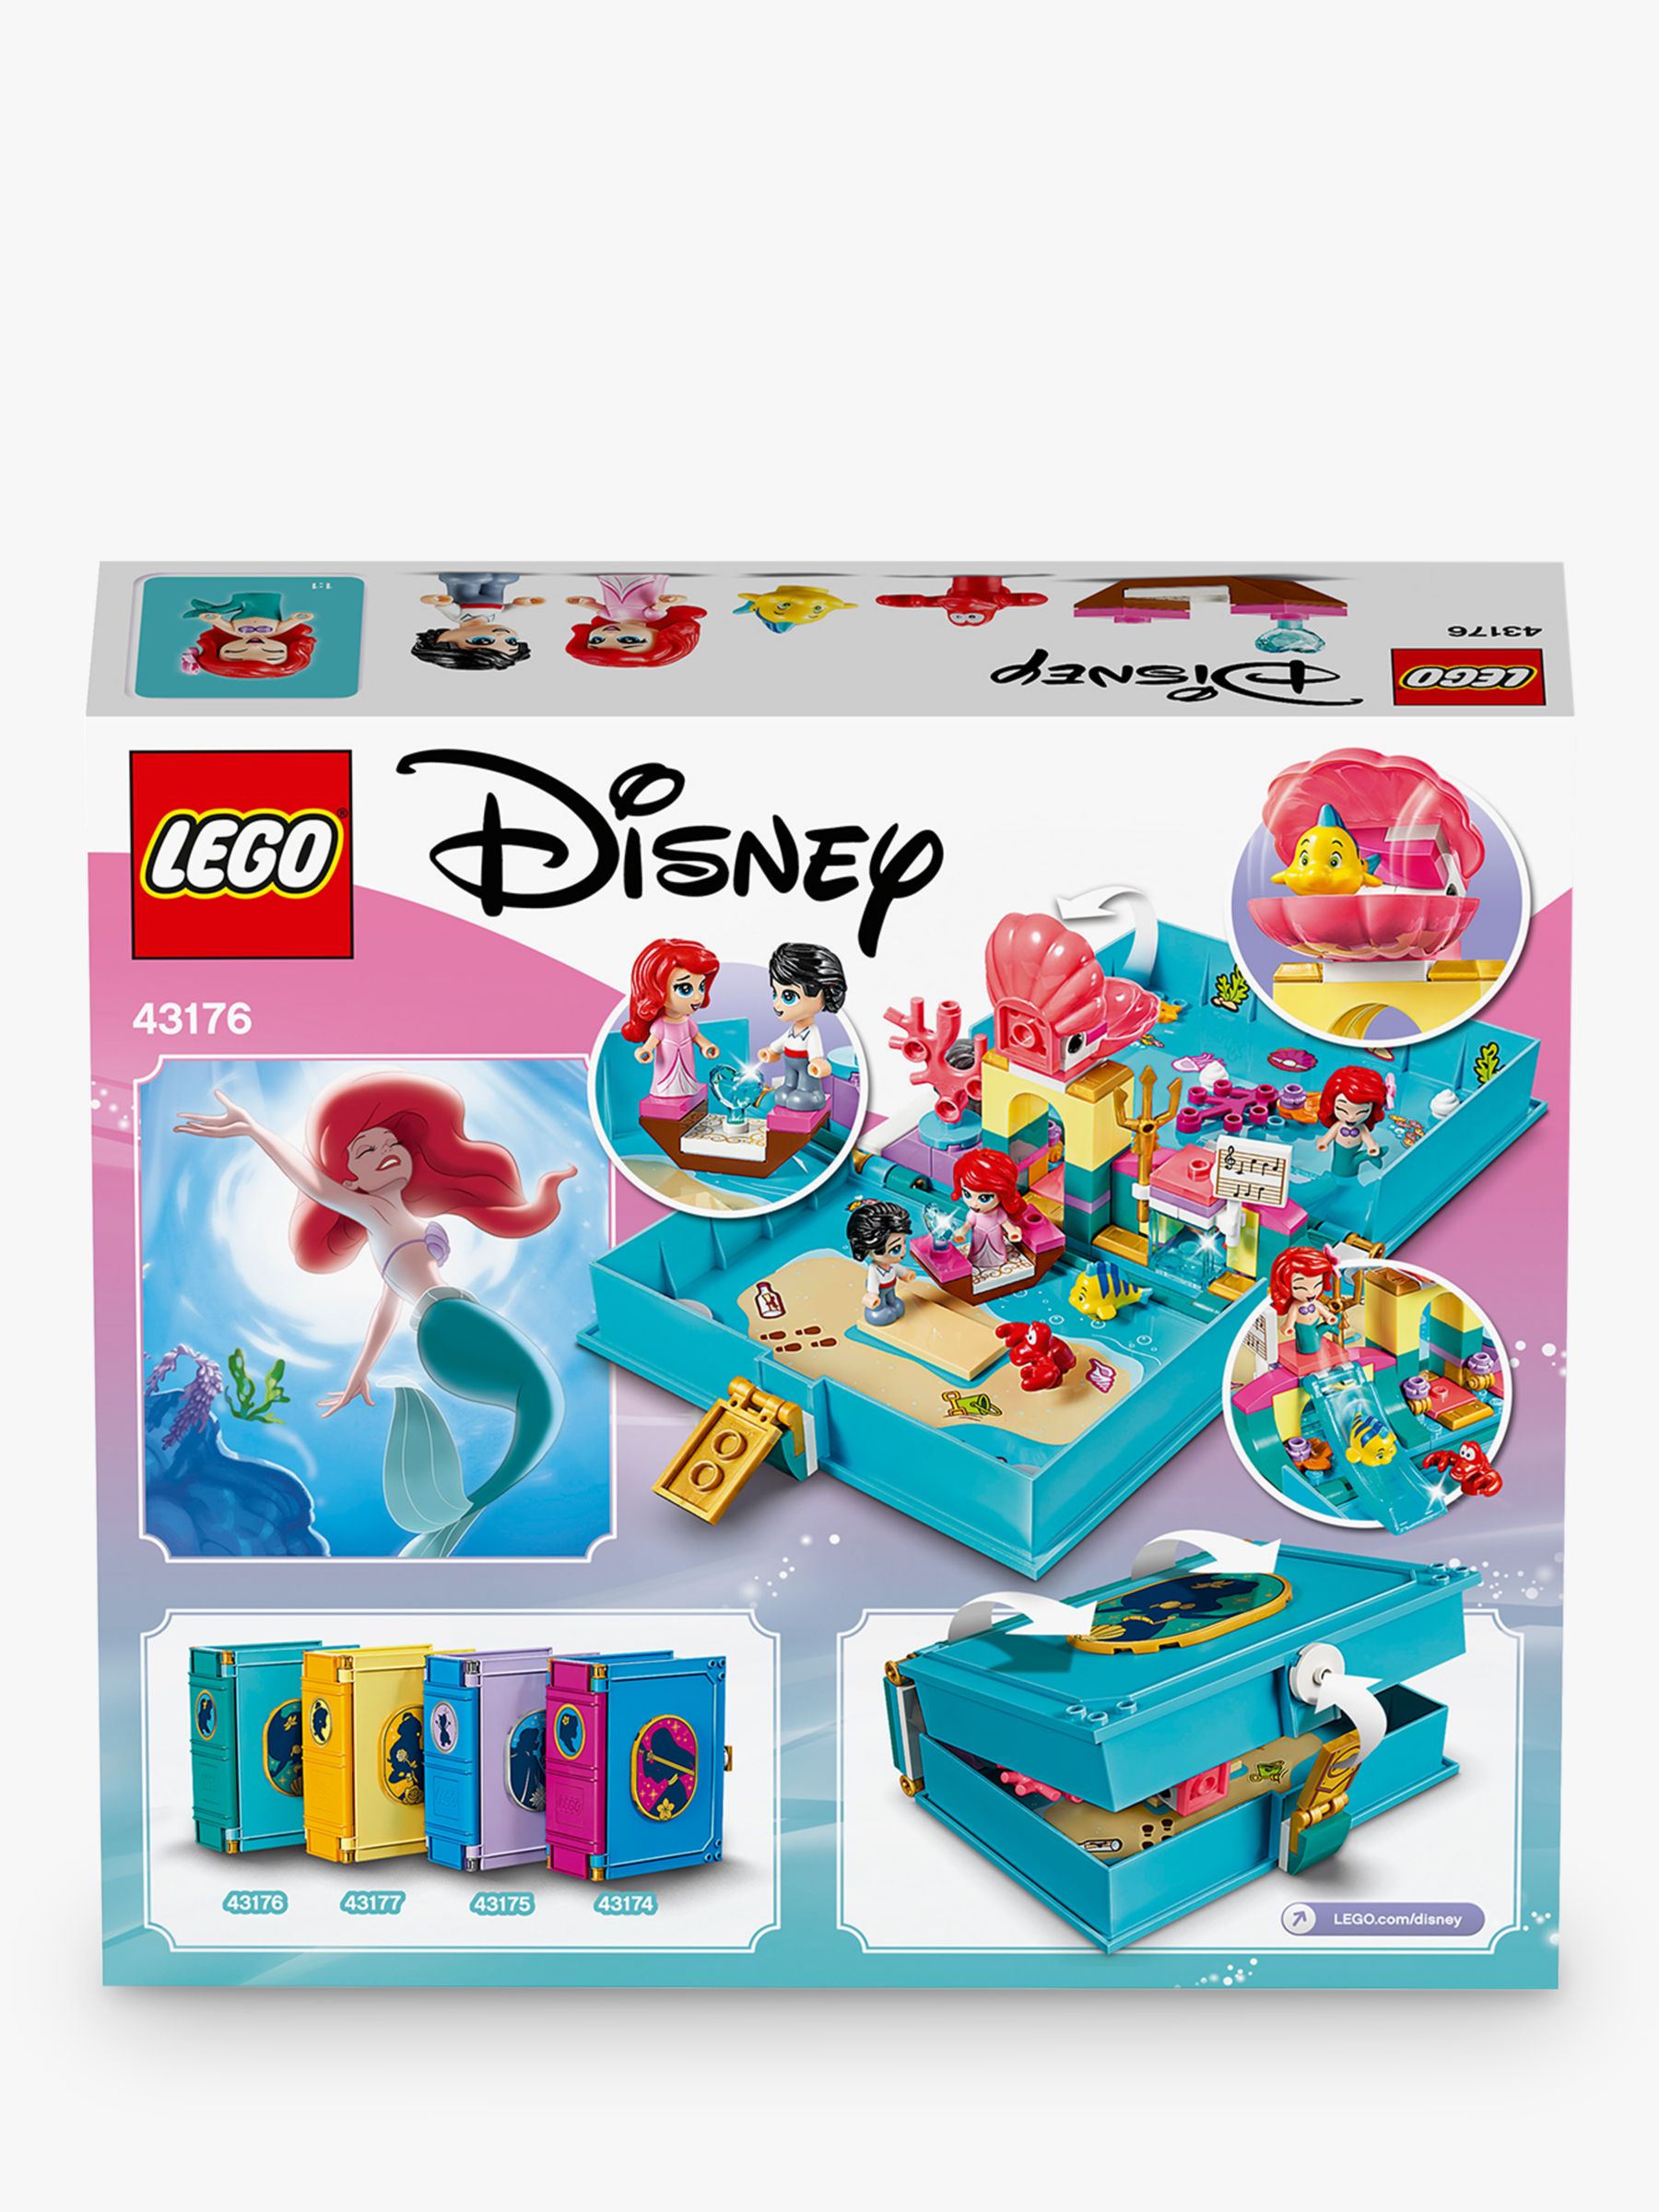 Disney Lego Ariel's Storybook Adventures Building Set New with Box 